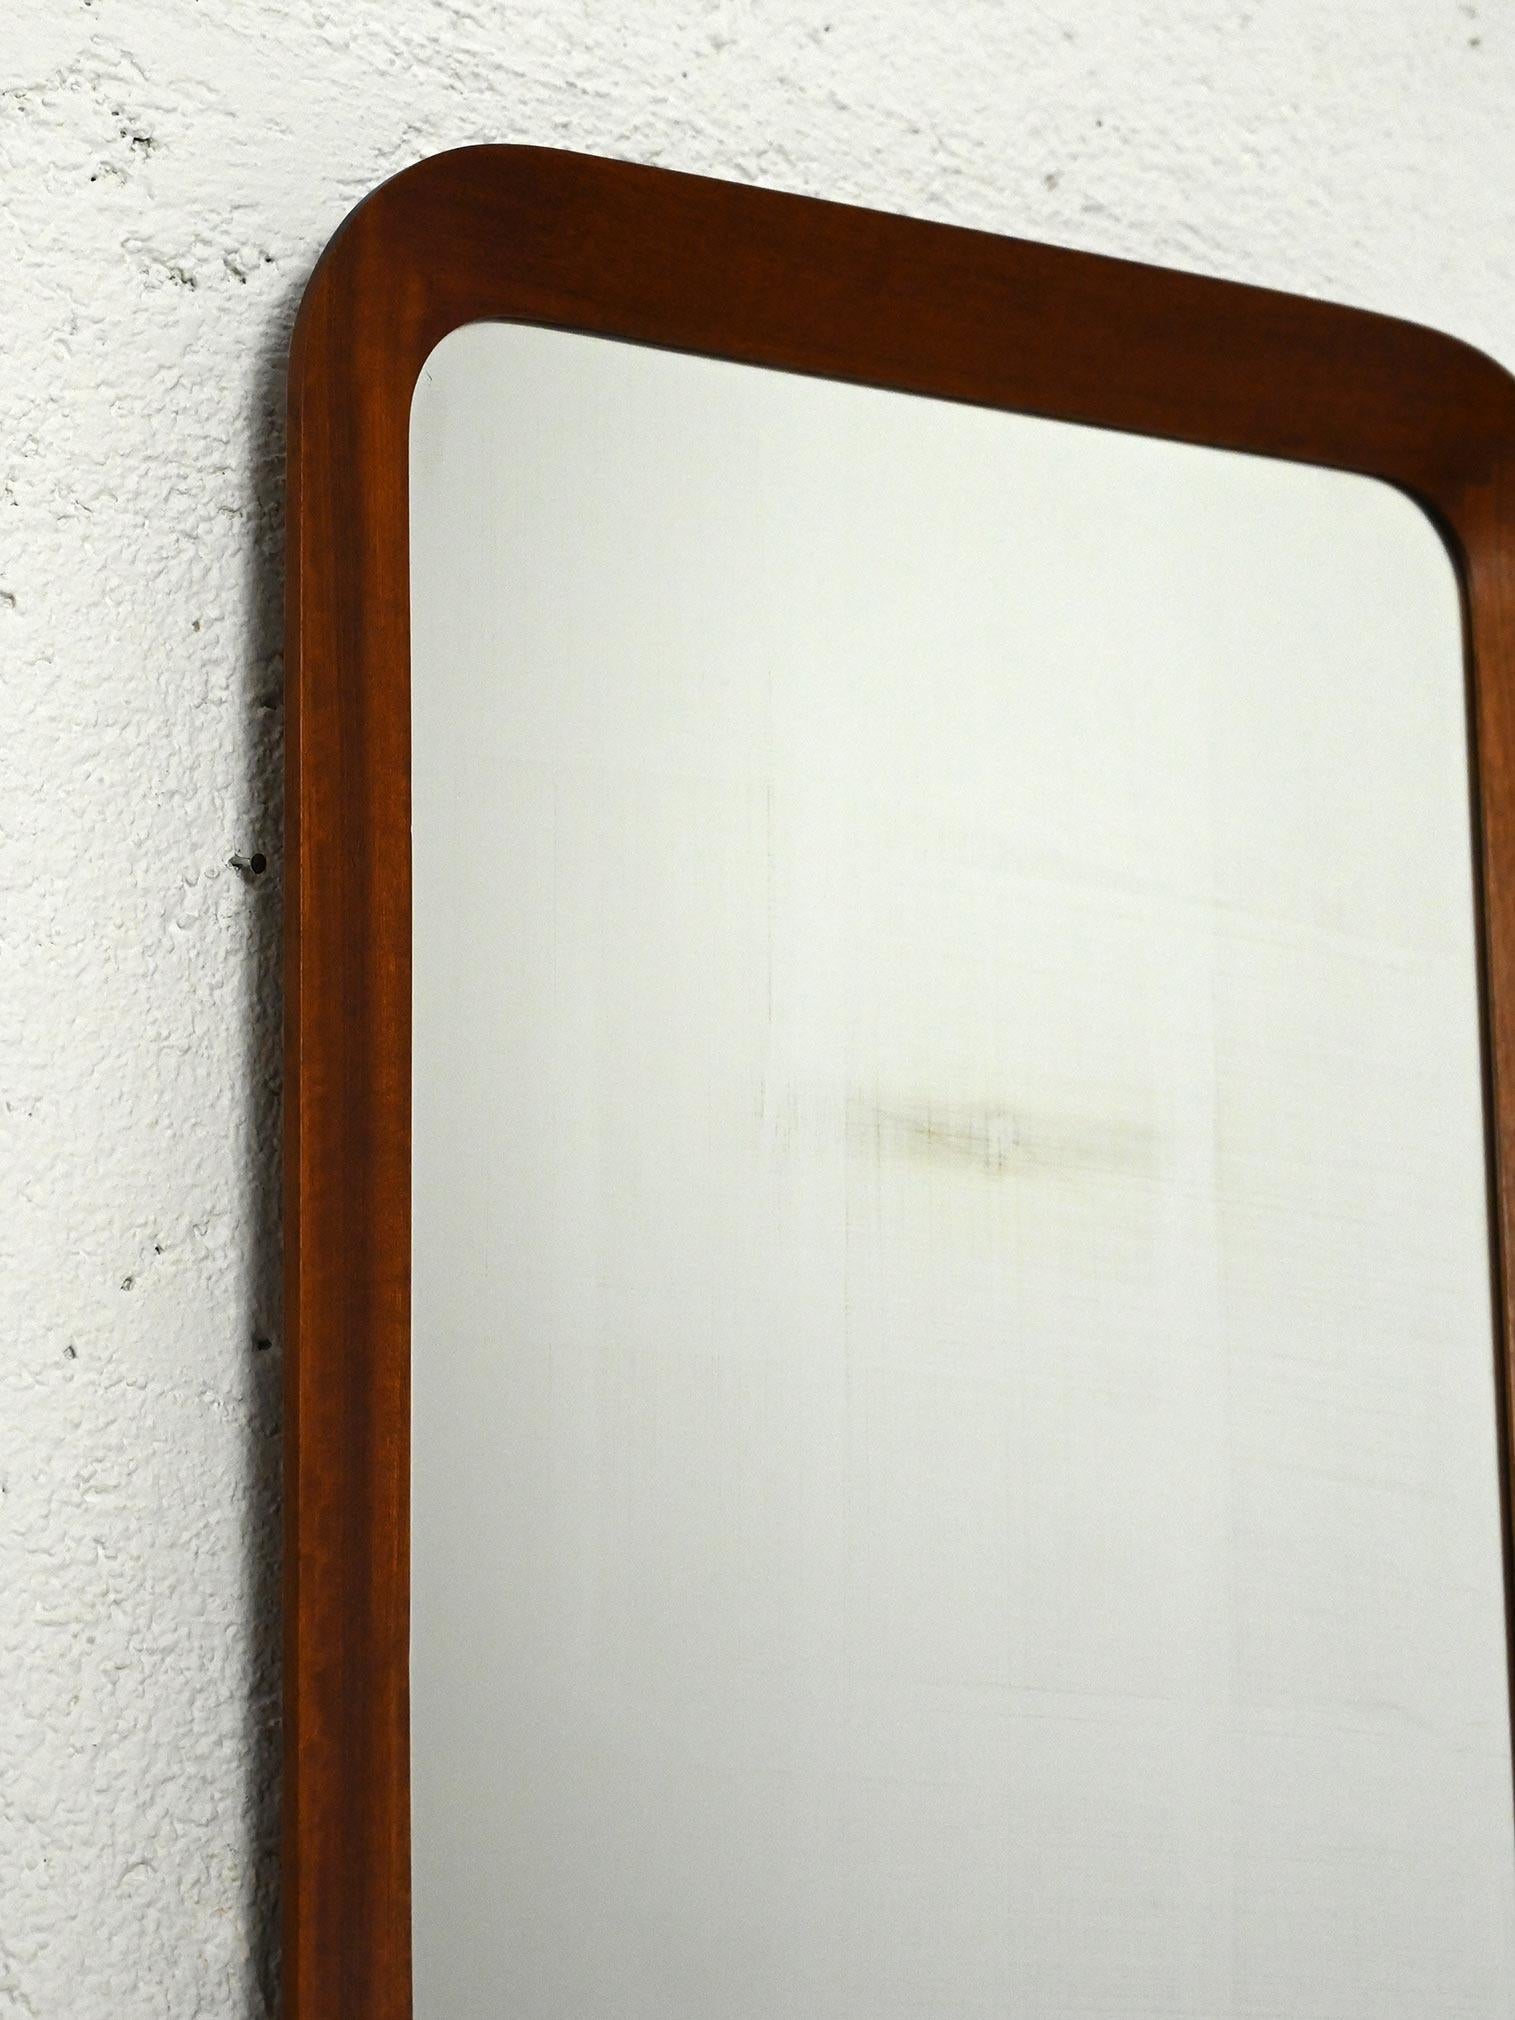 Scandinavian Teak mirror with beveled frame